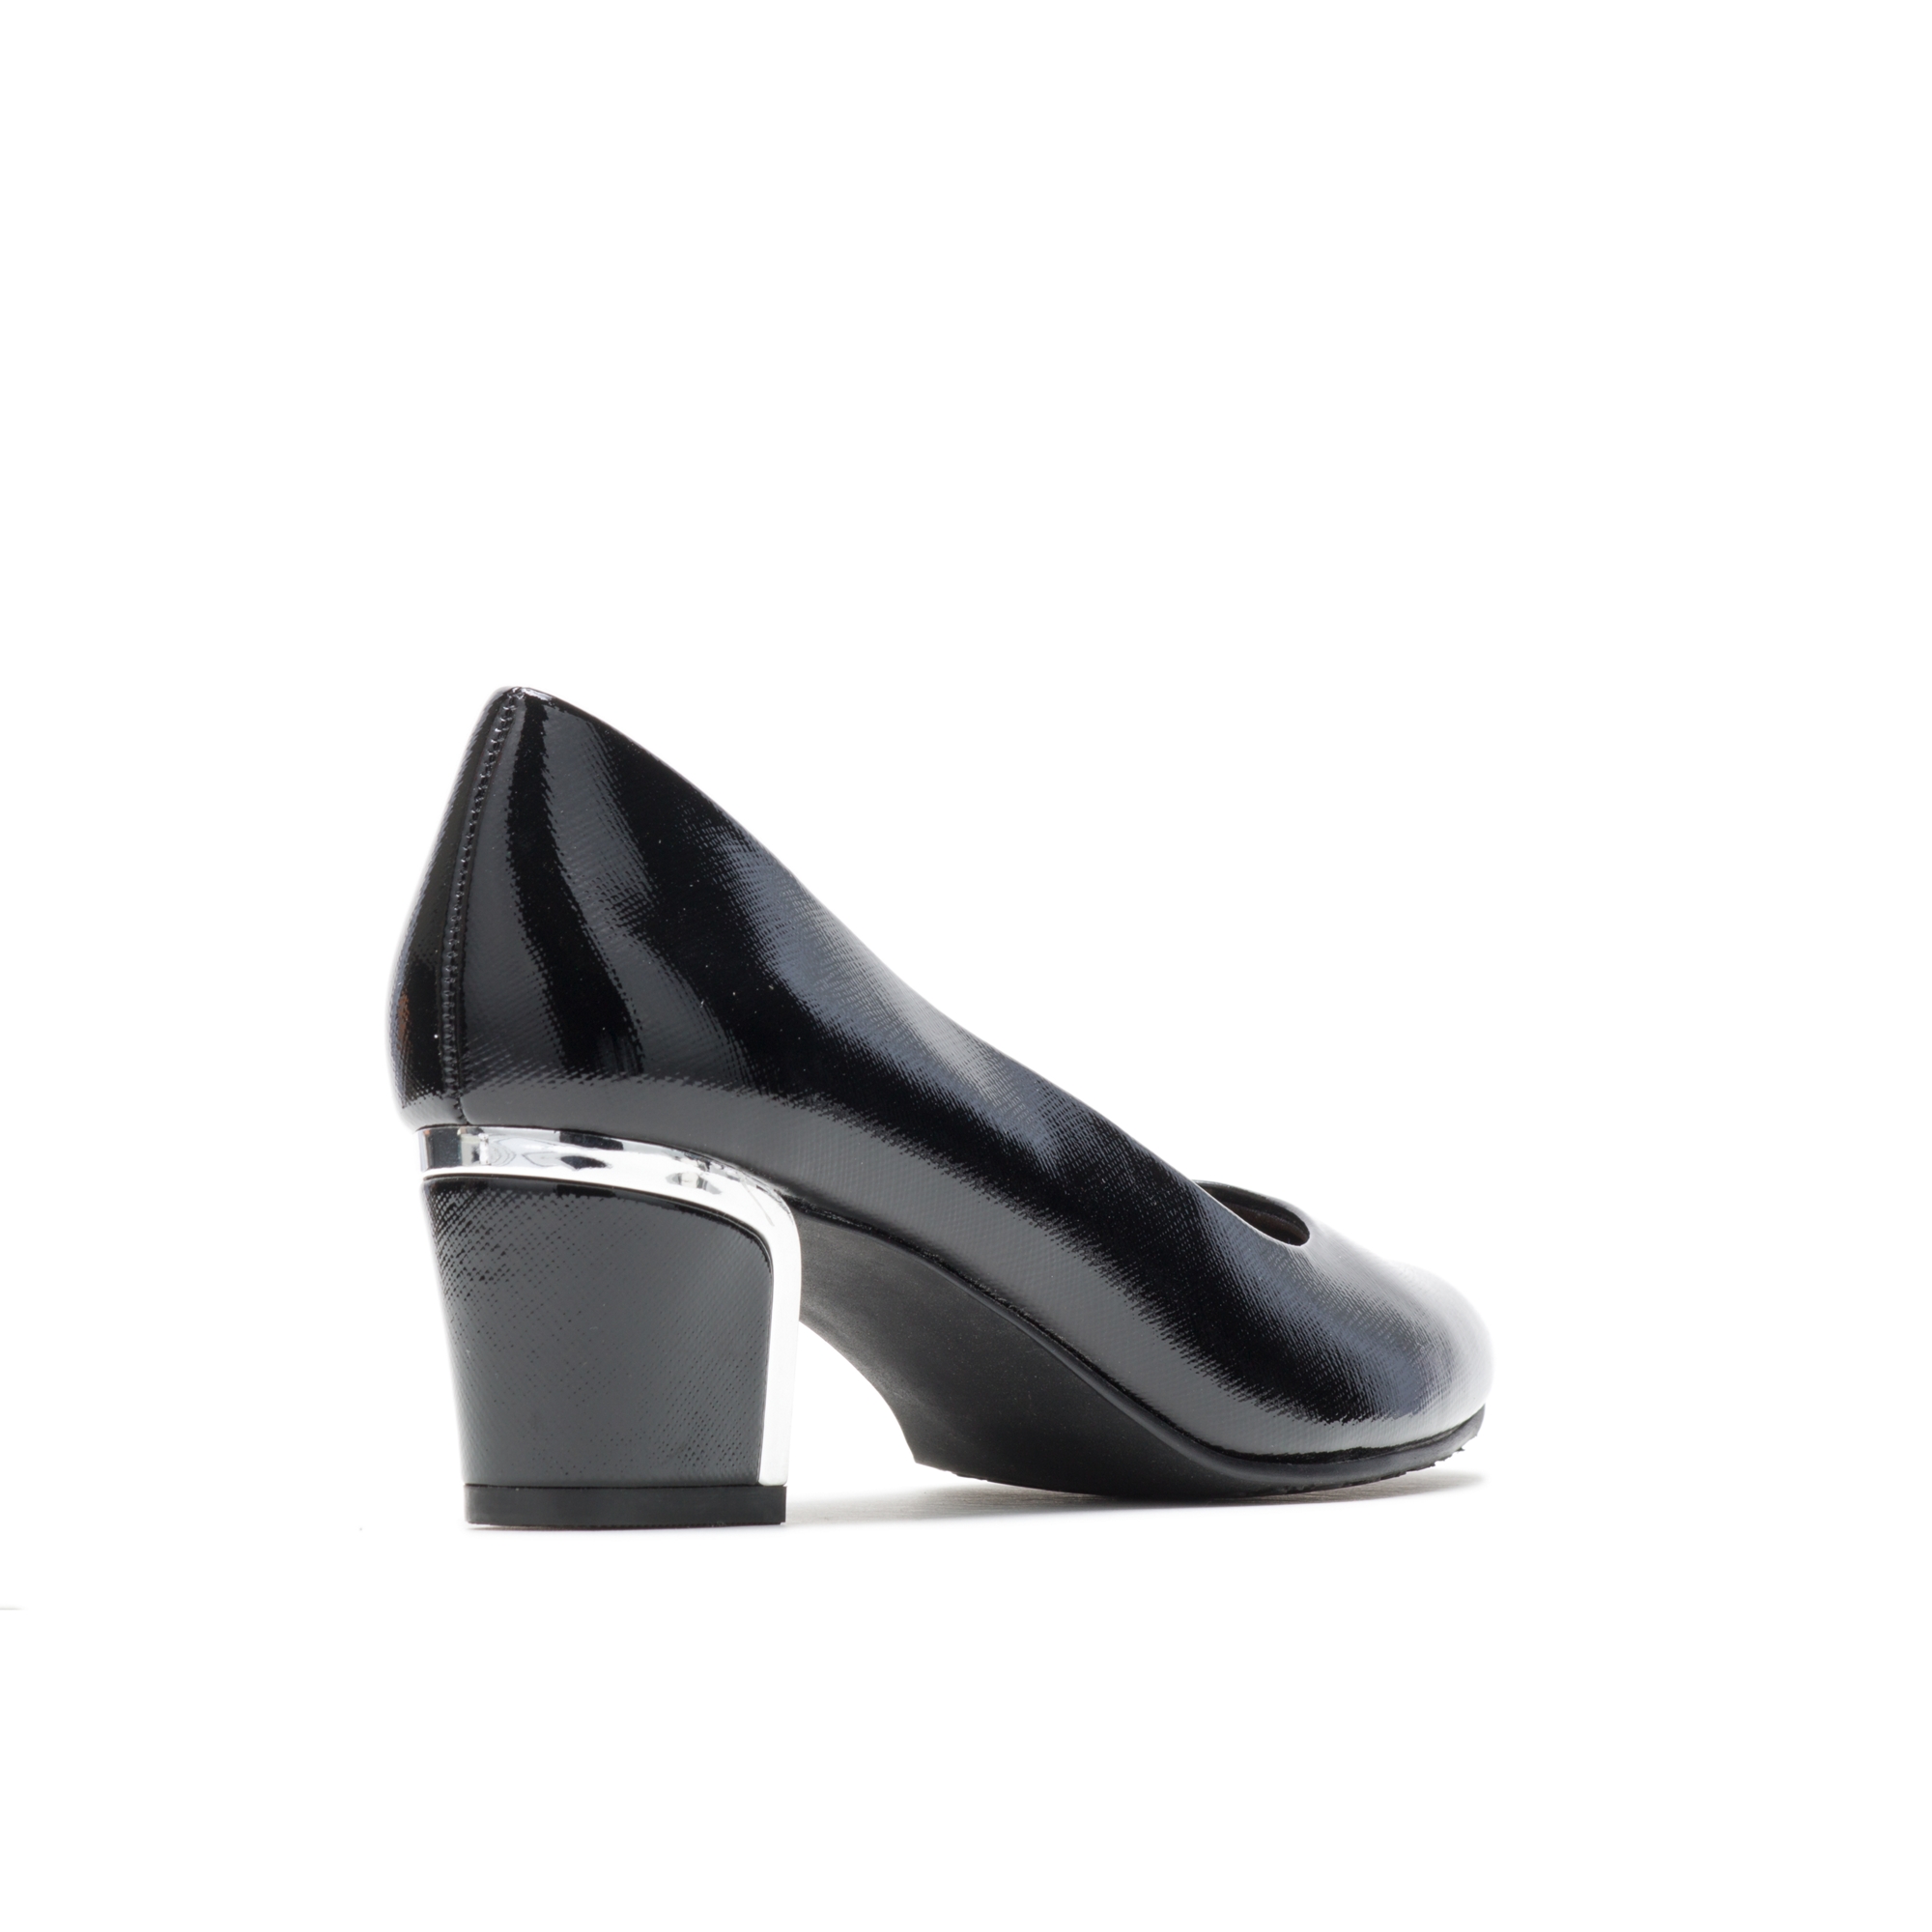 Soft Style Women Deanna Heel Patent-Leather | eBay